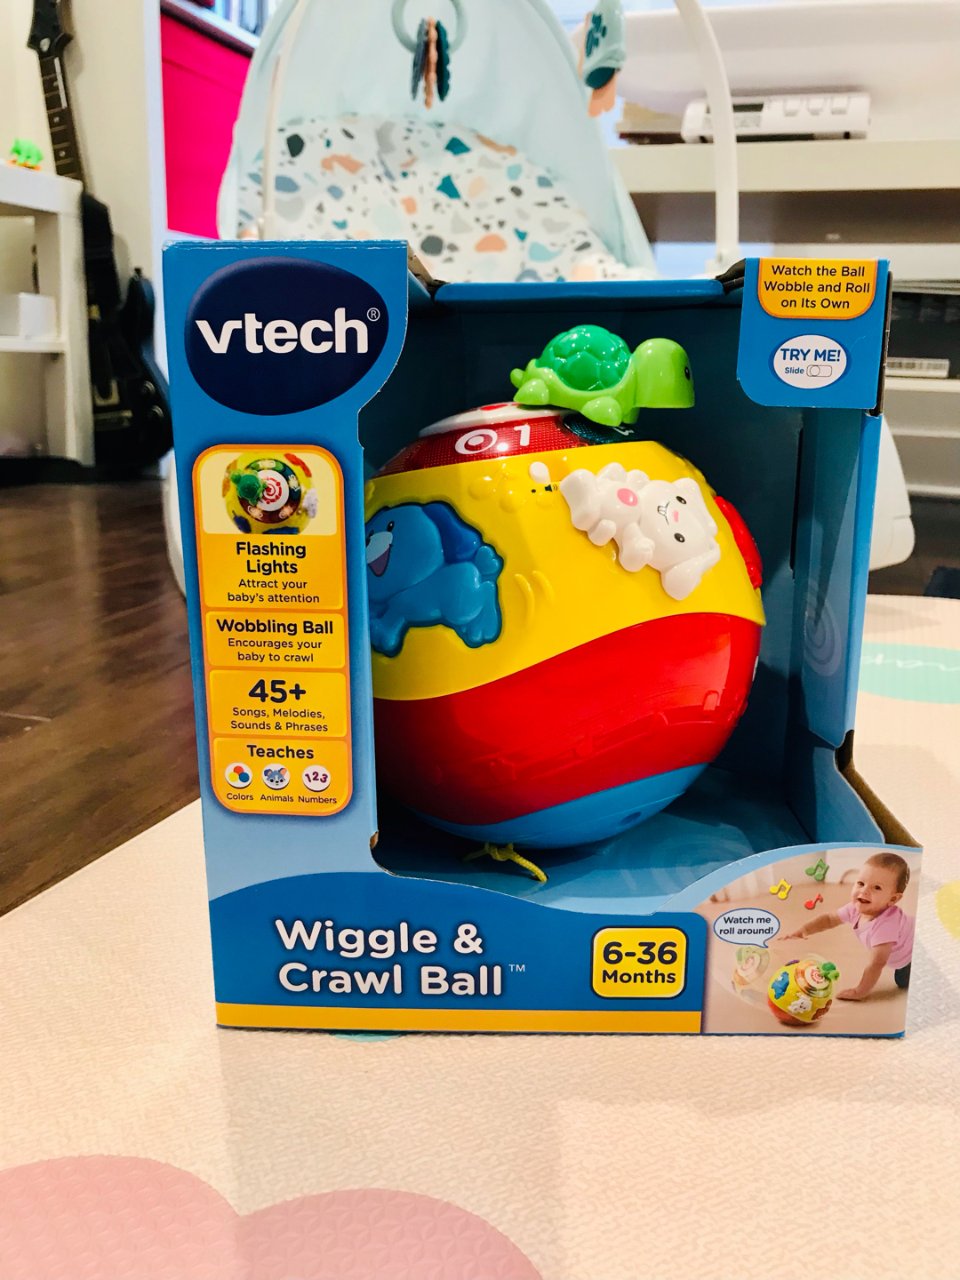 vetch的小球球和方向盘玩具...